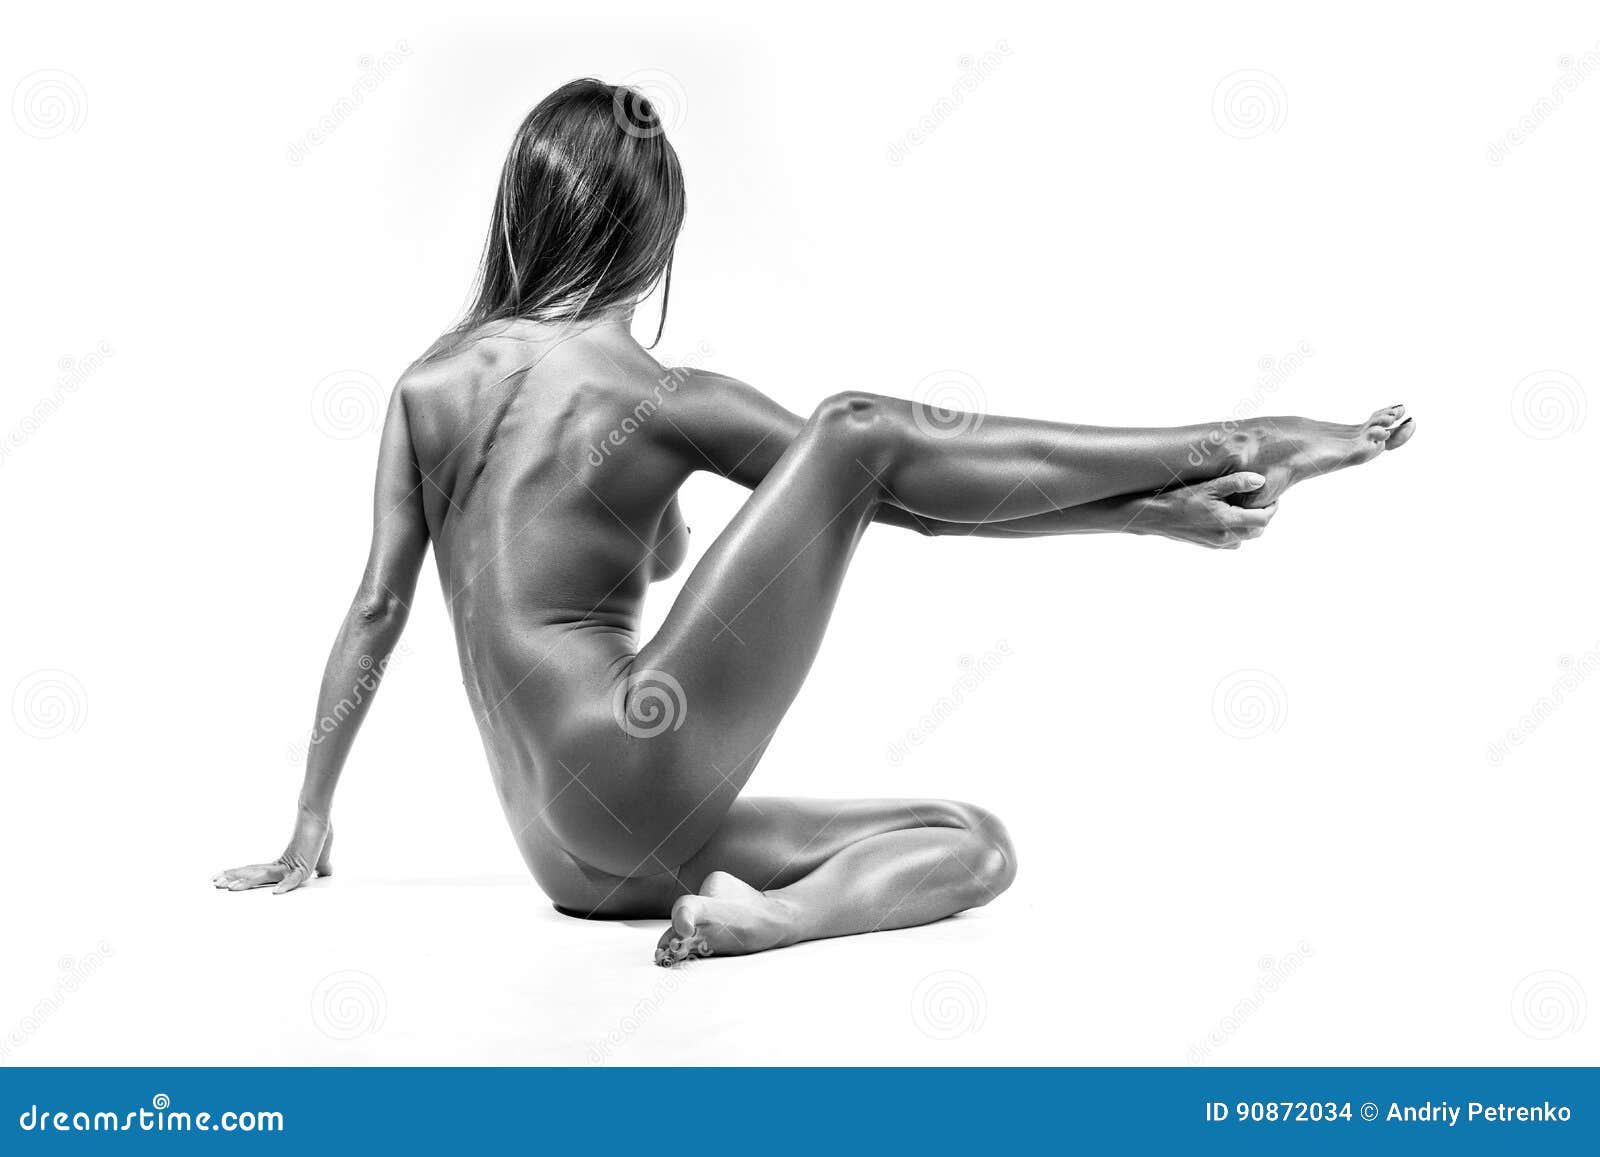 Black Sports Girls Nude - Sports naked girl posing stock photo. Image of posing - 90872034